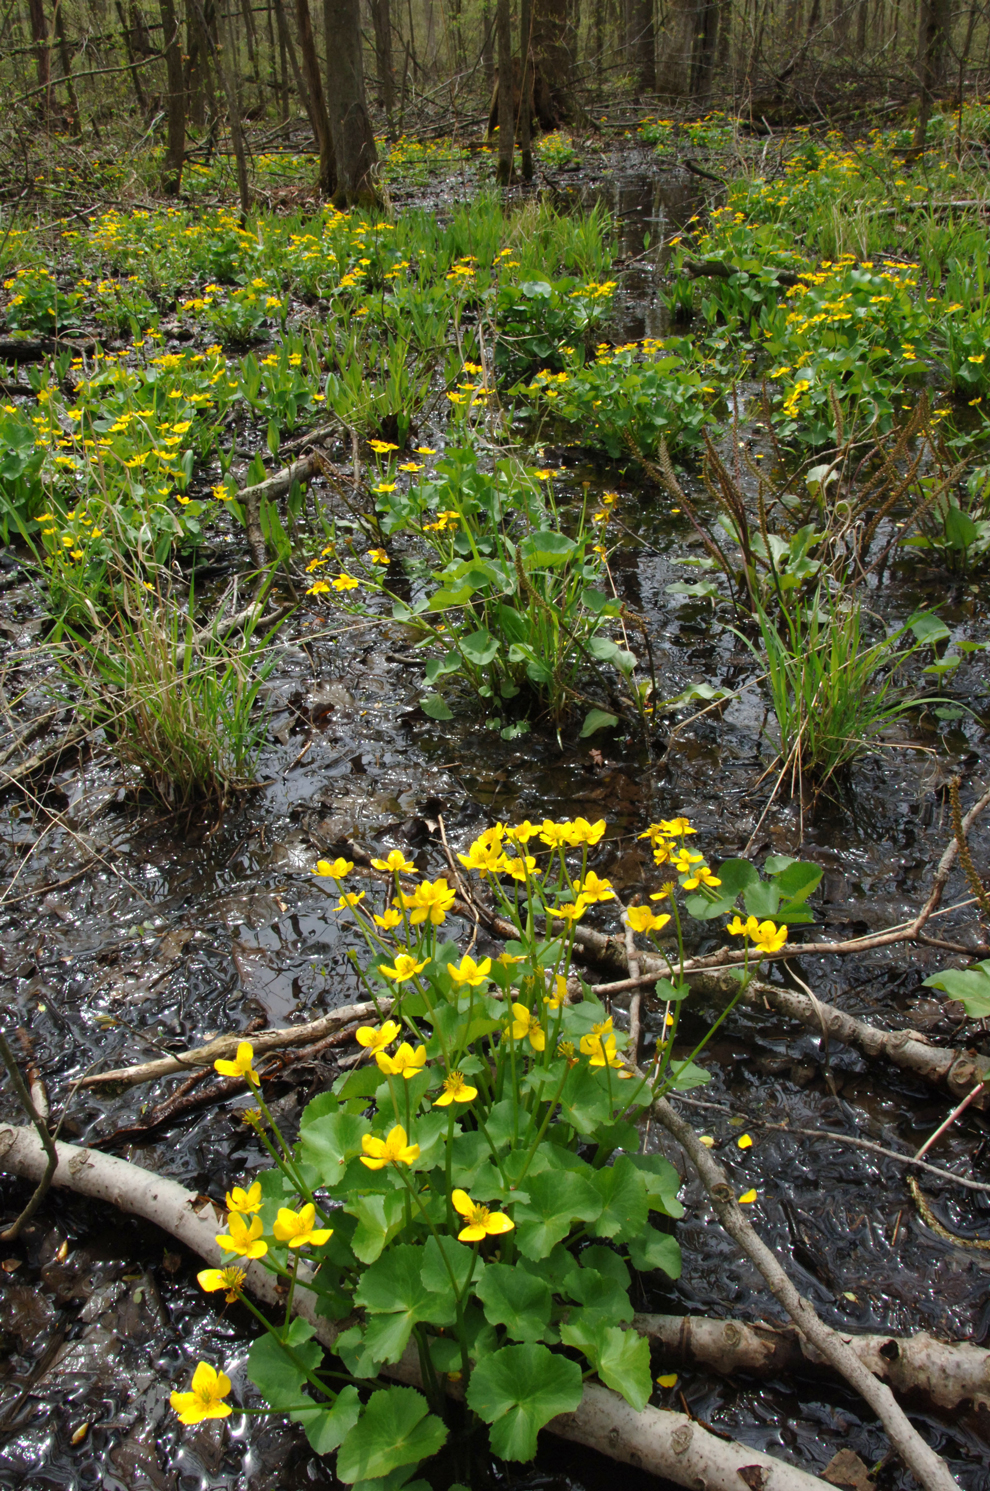 Marsh marigold wildflowers spreads across a wet marsh